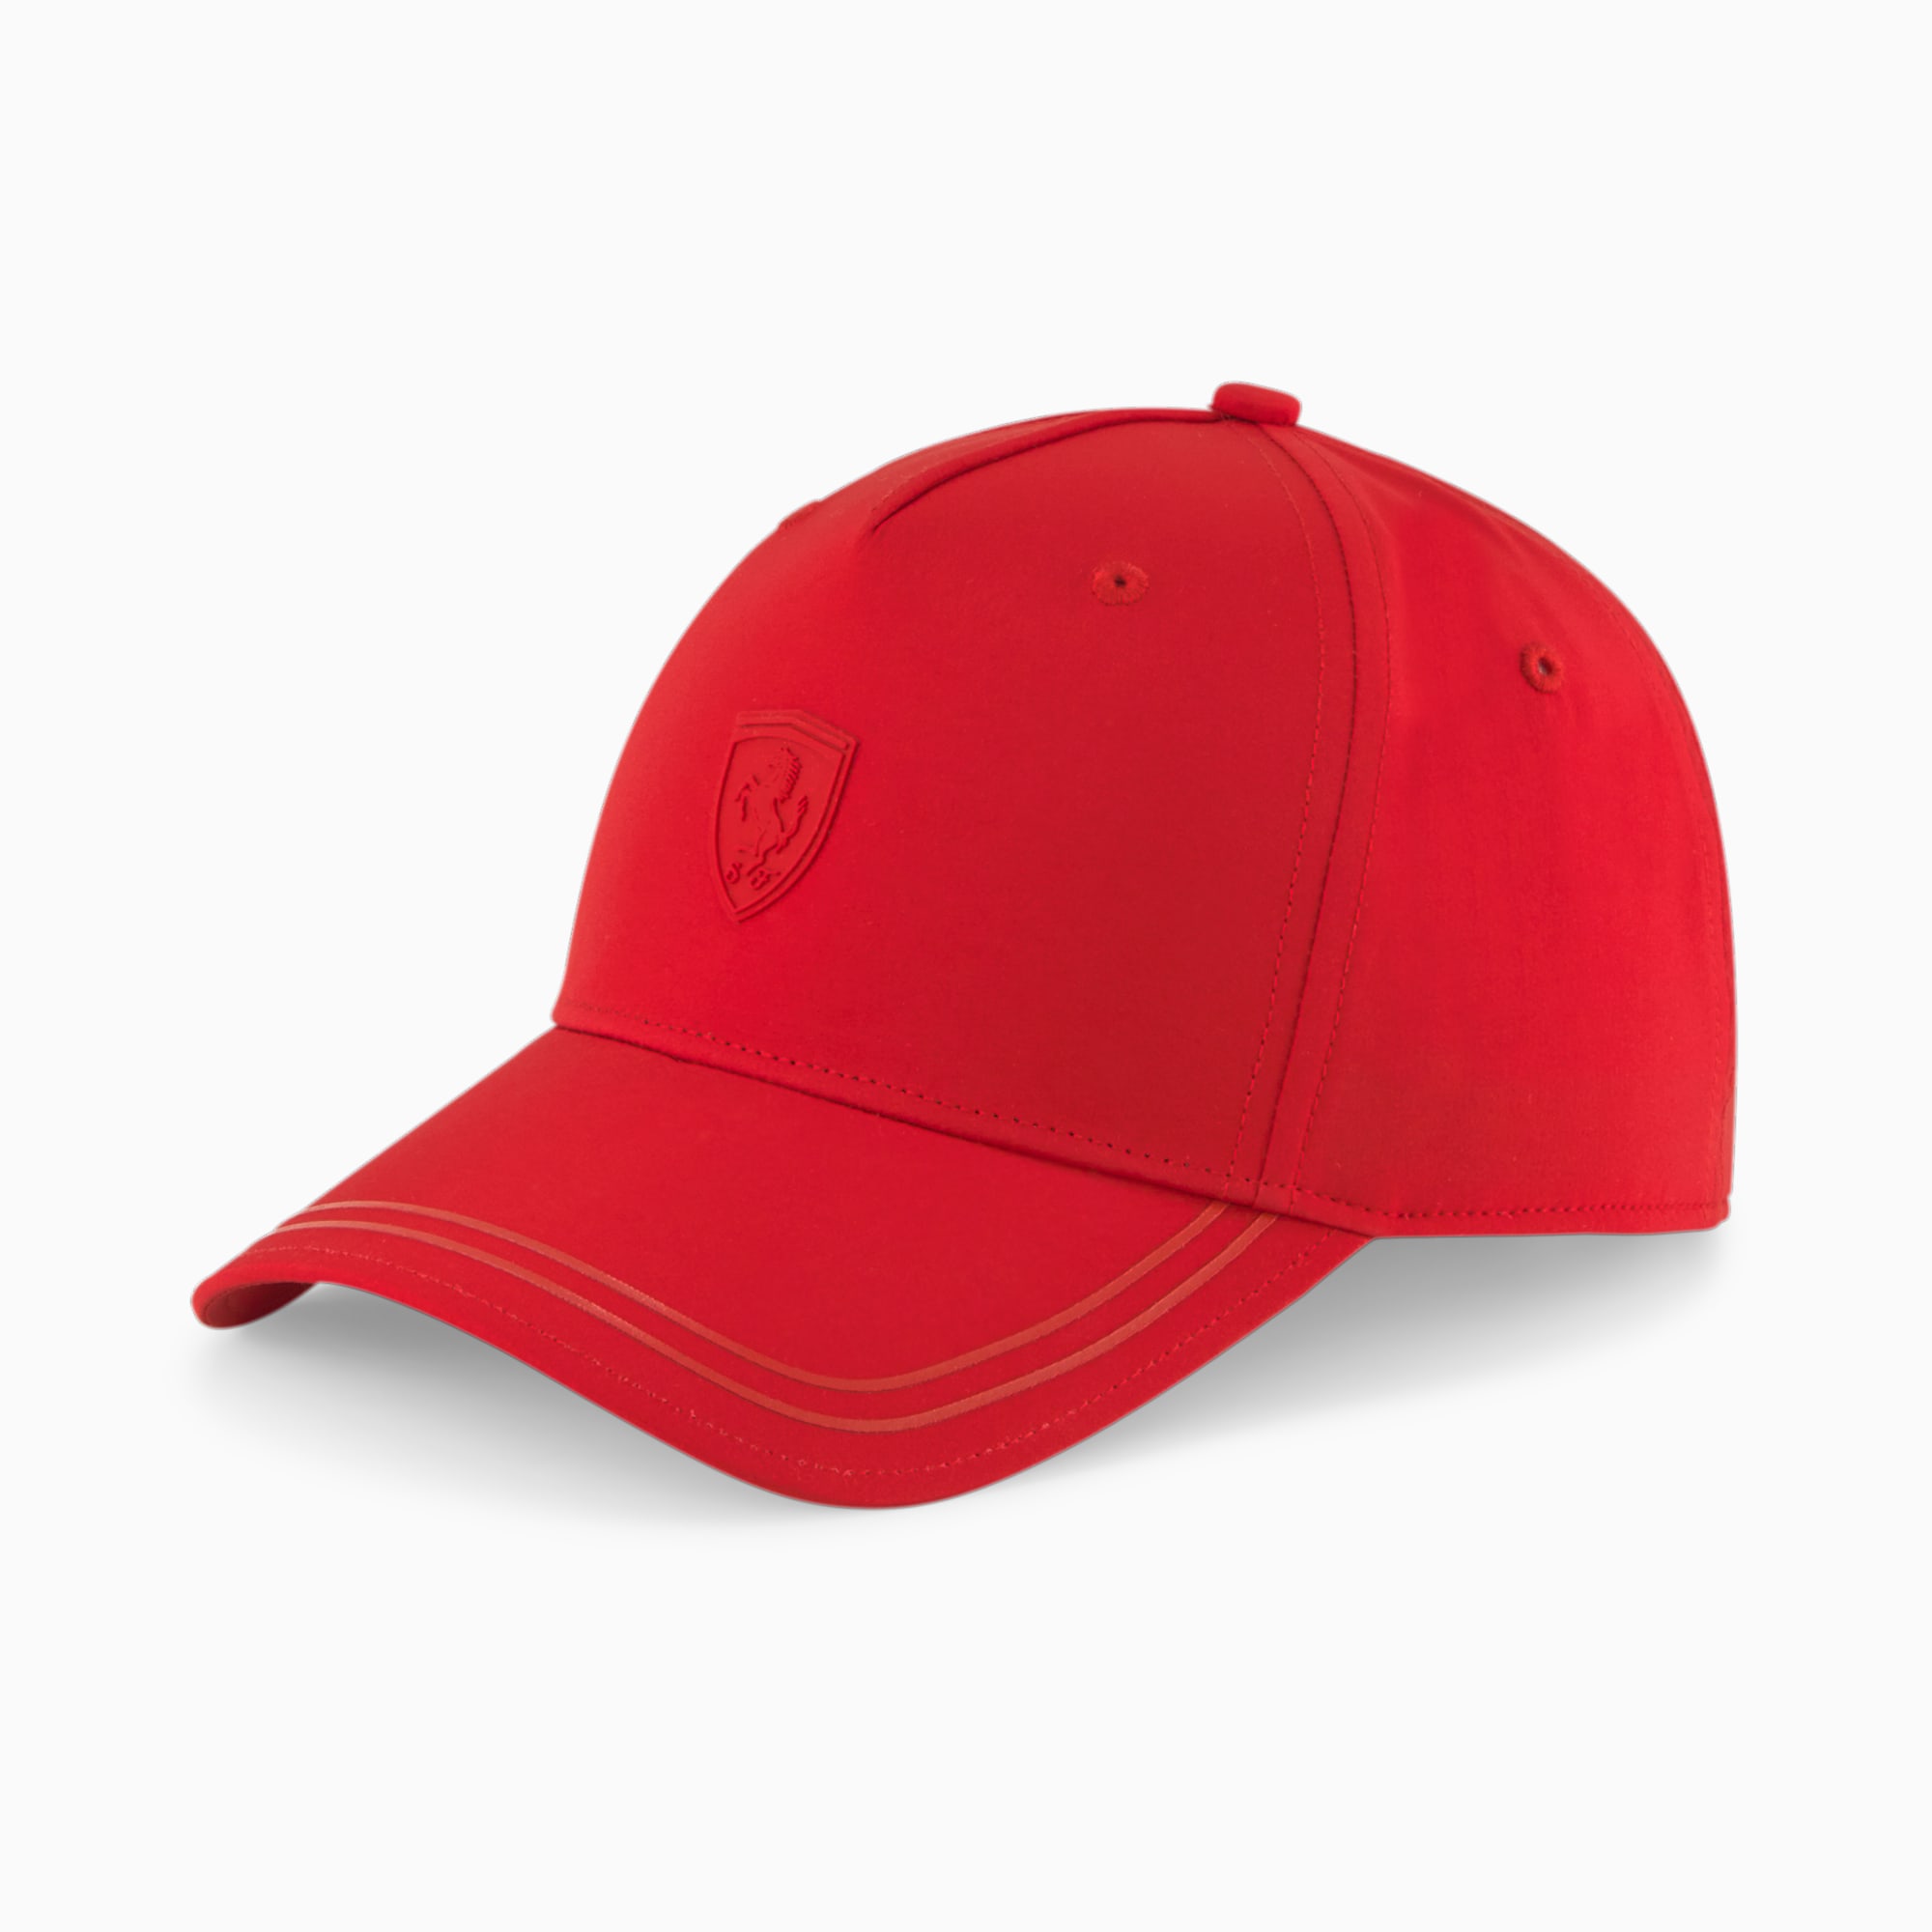 Puma Scuderia Ferrari Erkek Kırmızı Şapka (024454-02)